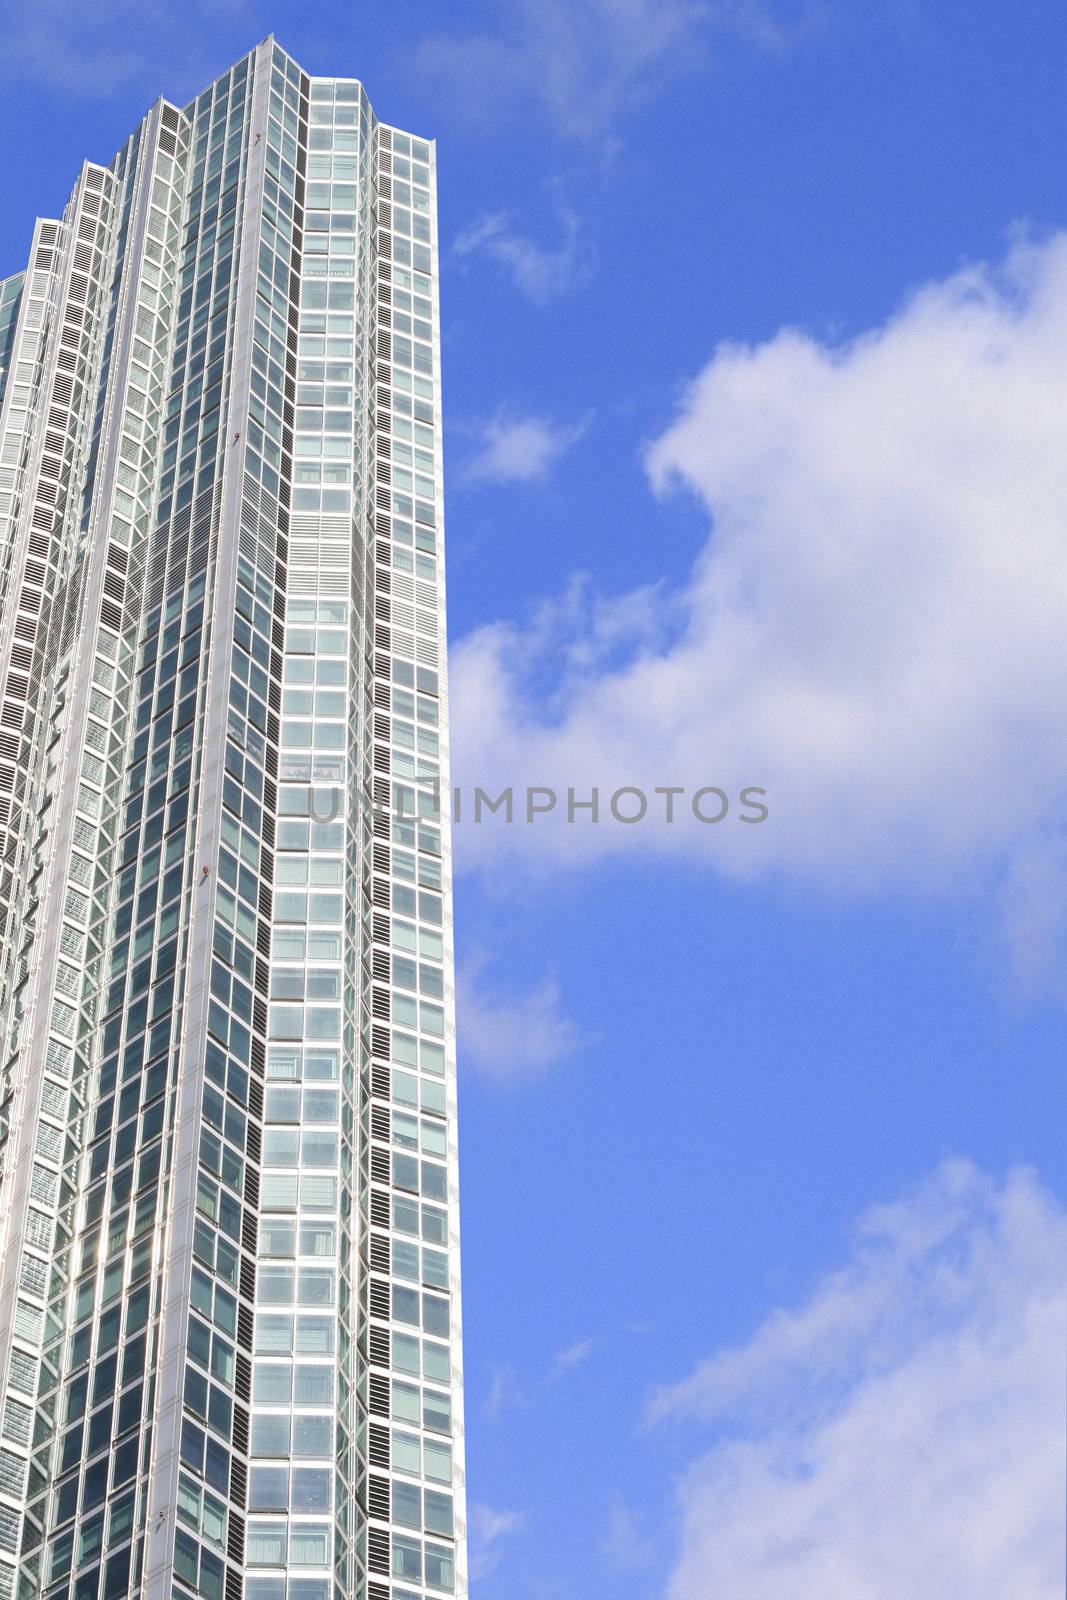 High rise building in Seoul Korea- a condominium with a beautiful sky blue background.